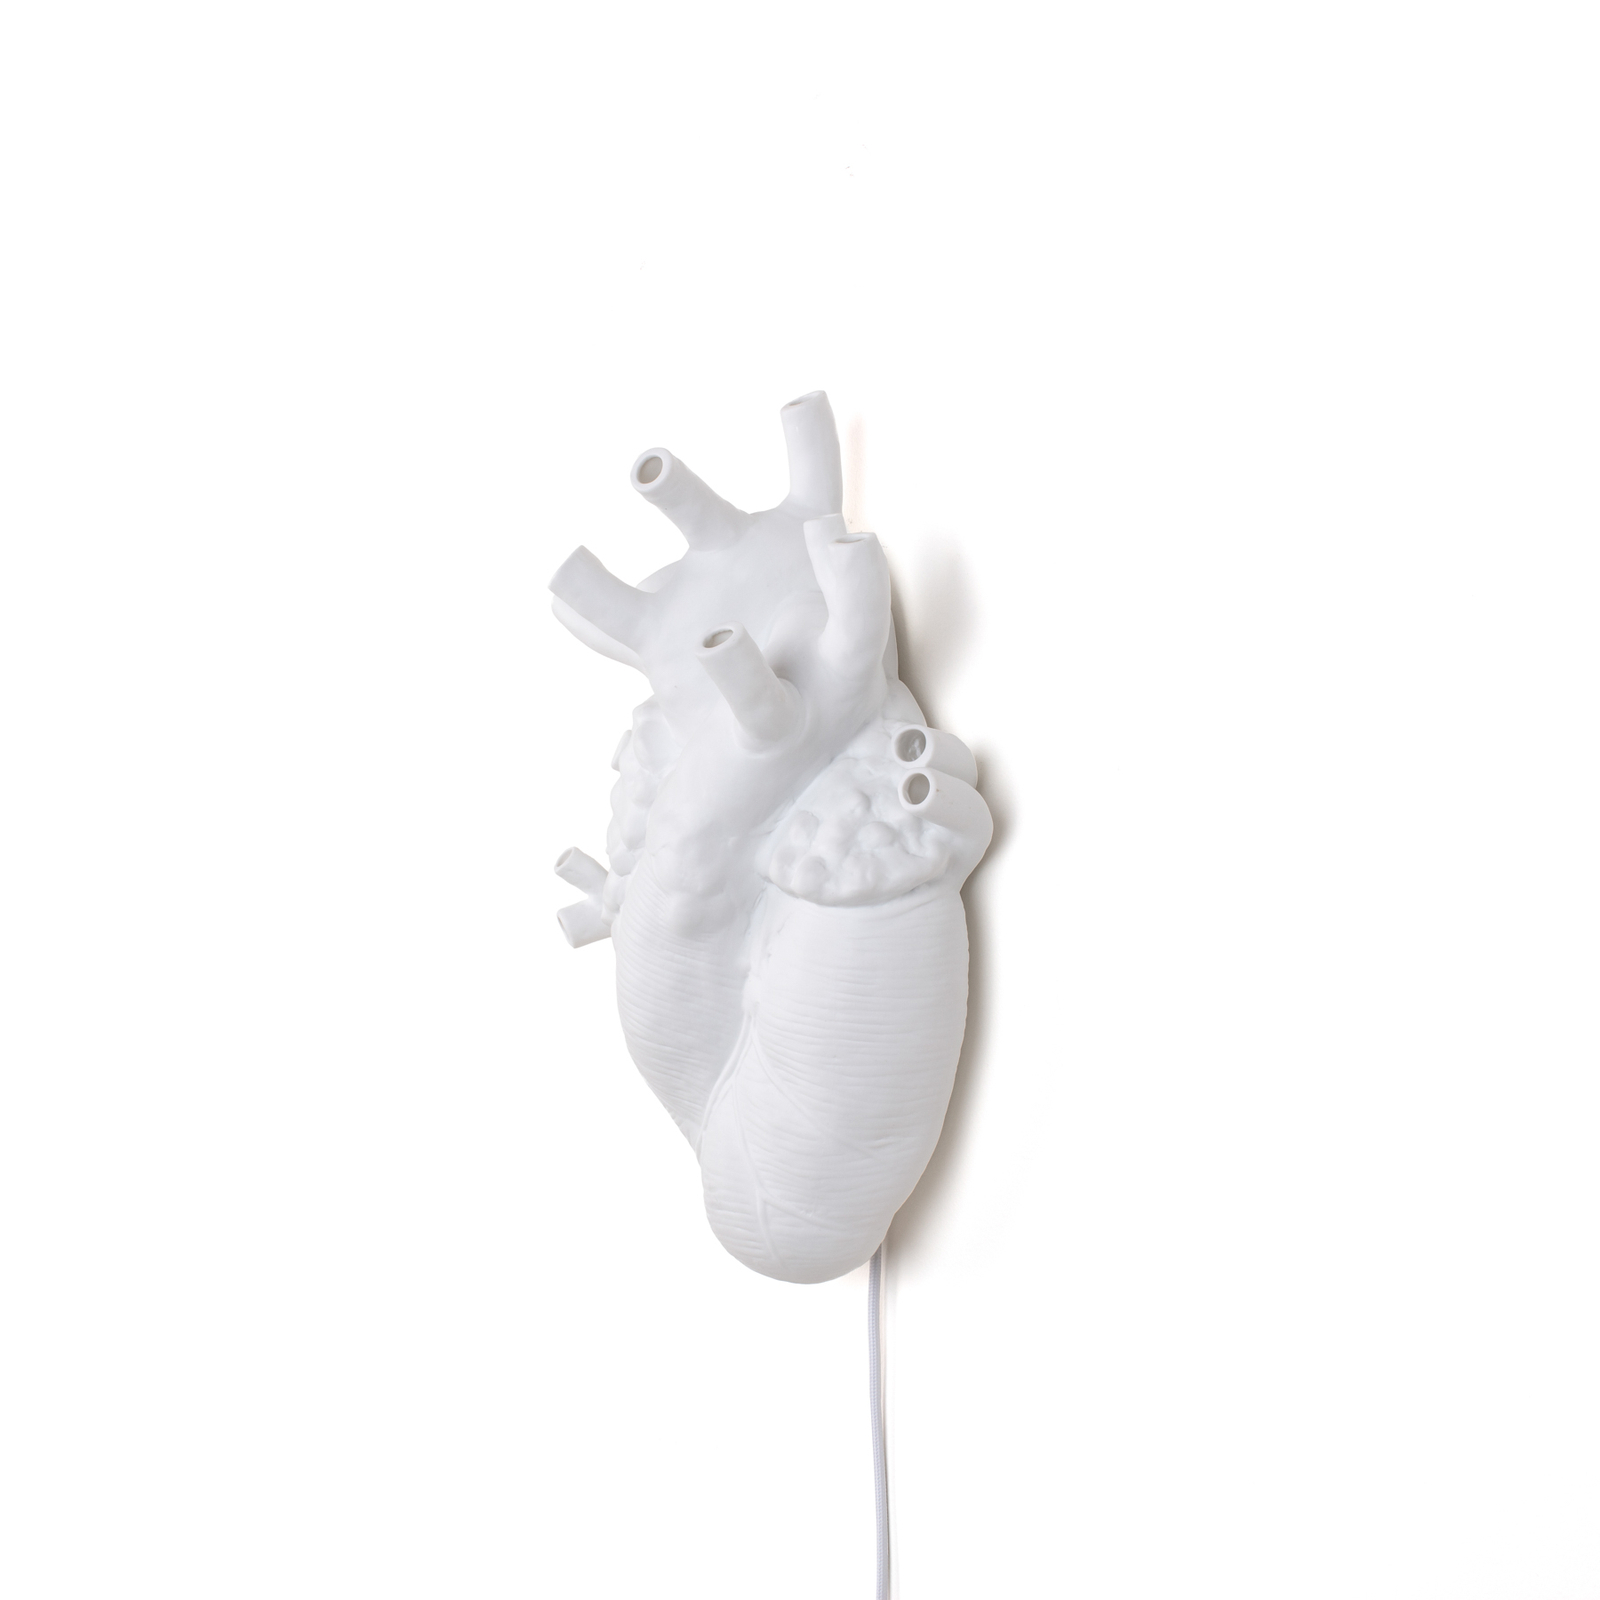 LED wandlamp Heart Lamp van porselein, wit